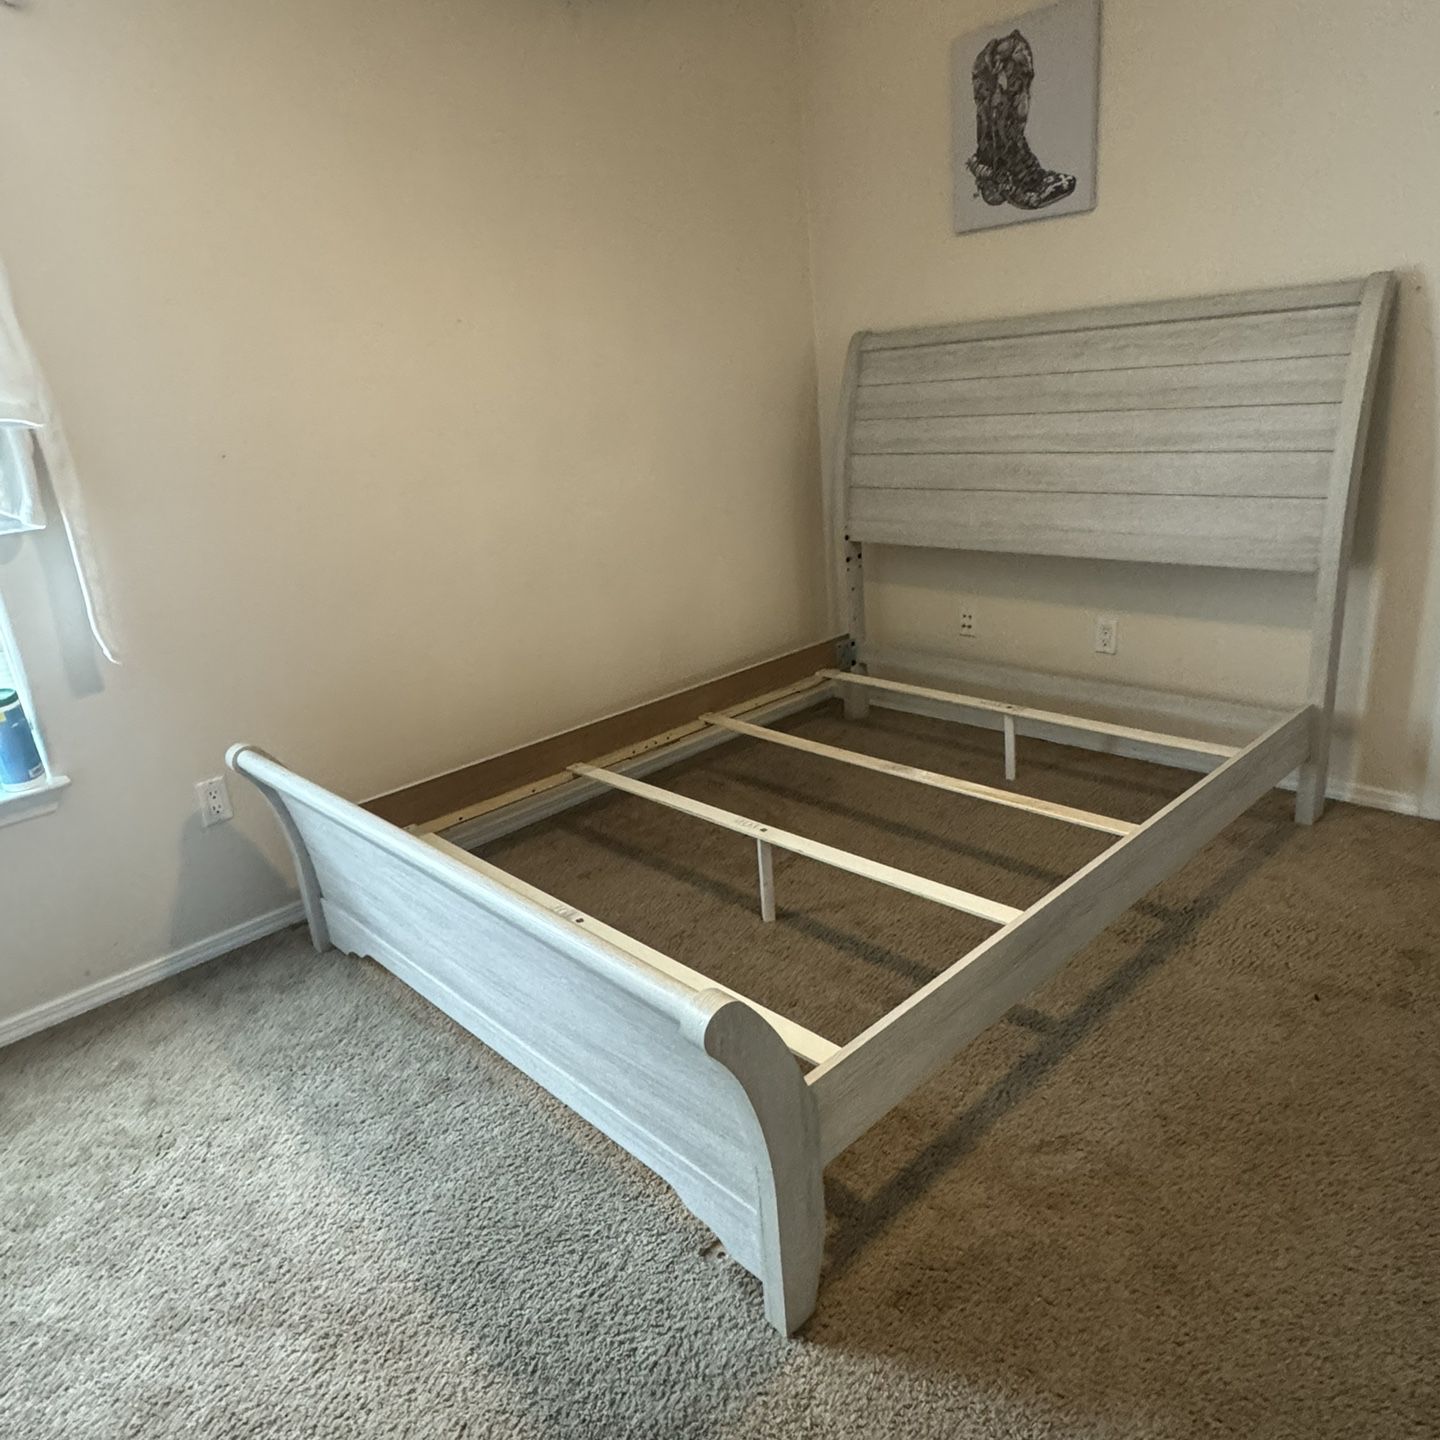 Conn’s Queen bed frame, light grey wood 